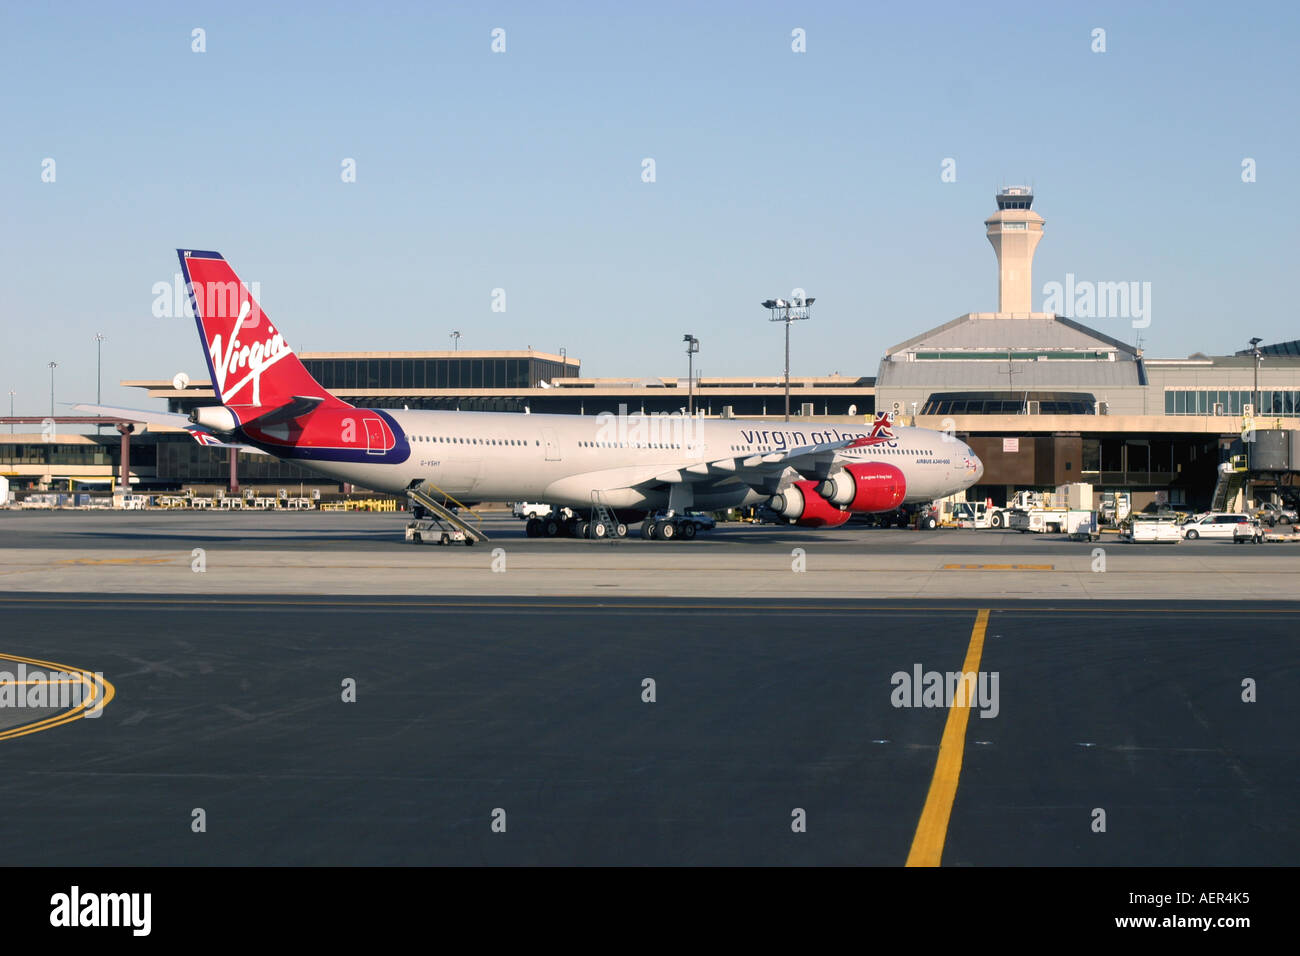 Virgin Airlines Aircraft at on the tarmac at Newark Liberty International Airport, New Jersey, U.S.A. Stock Photo